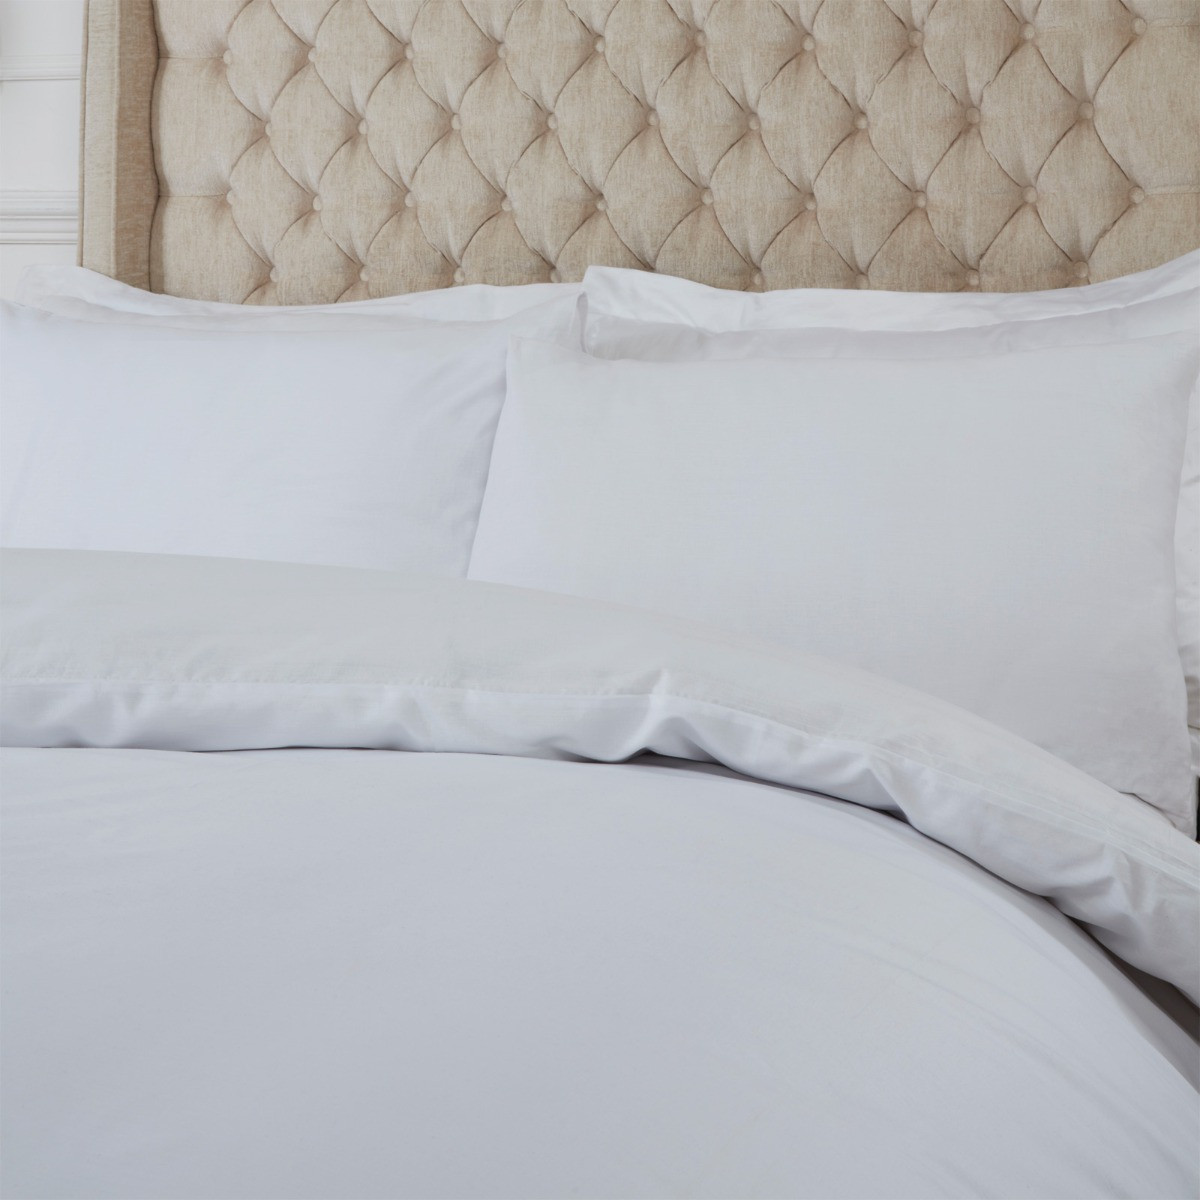 Highams Plain 100% Cotton Duvet Cover with Pillow Case Bedding Set, White - Double>